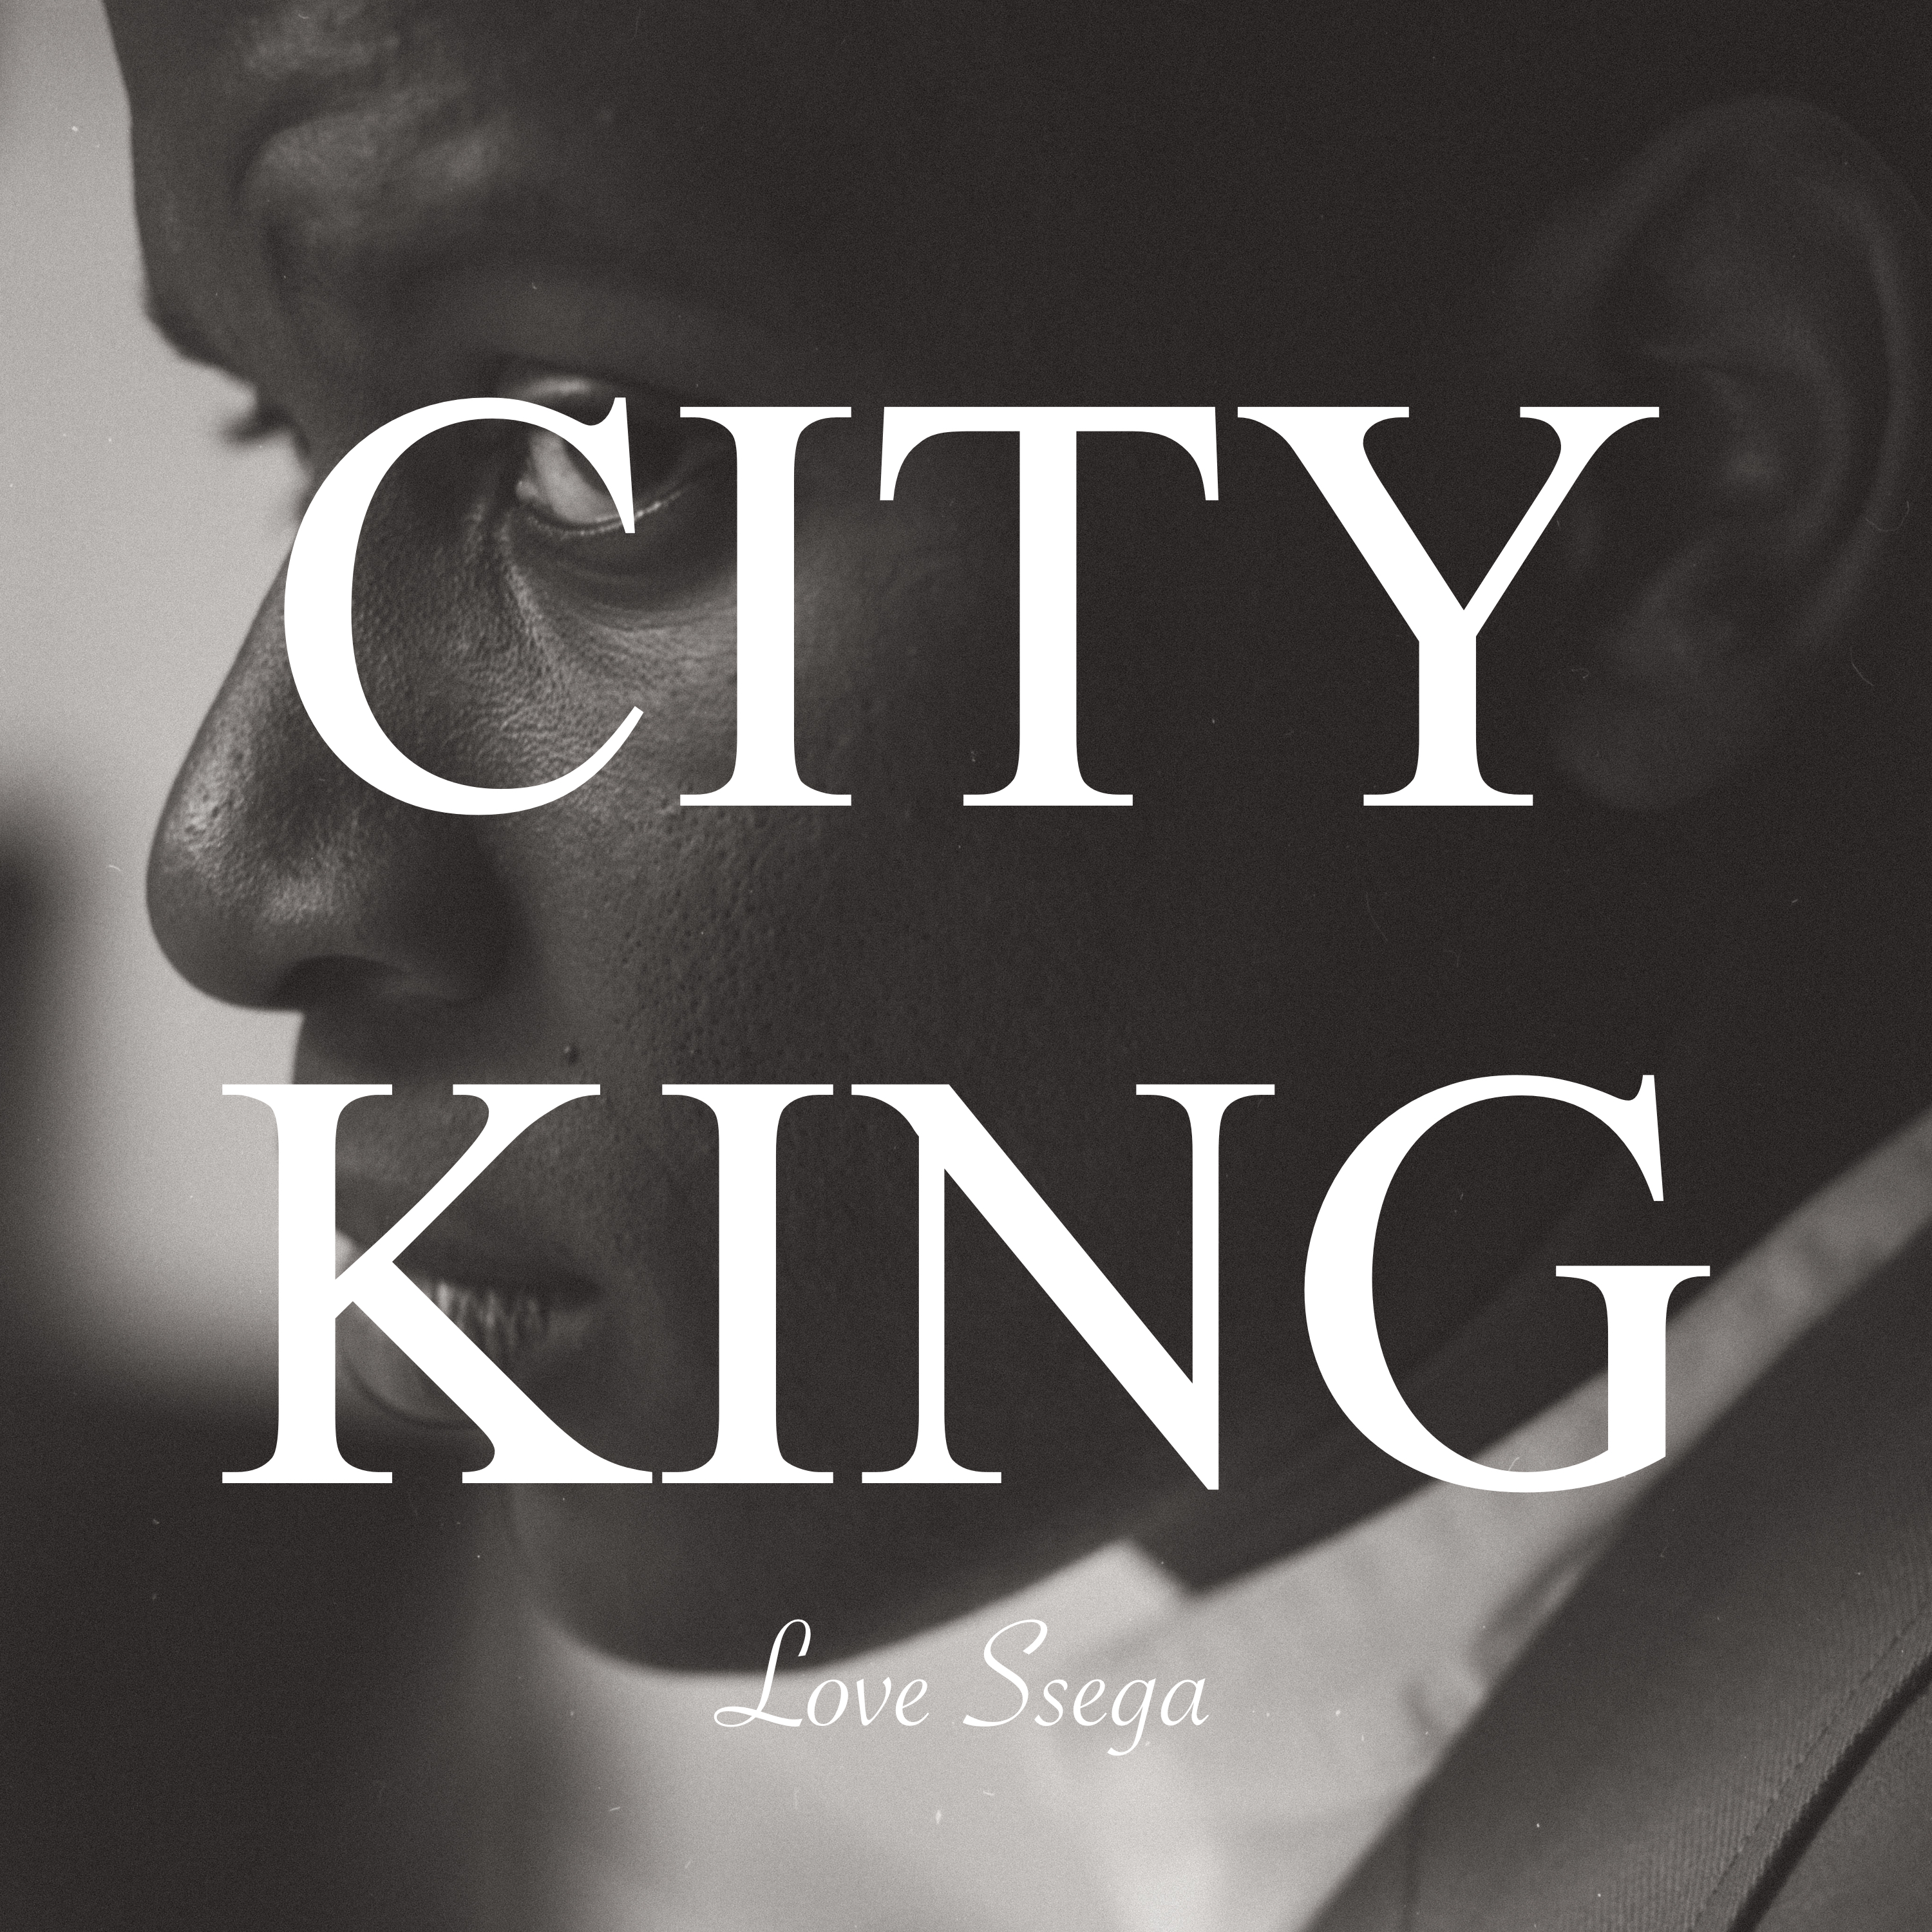 City King